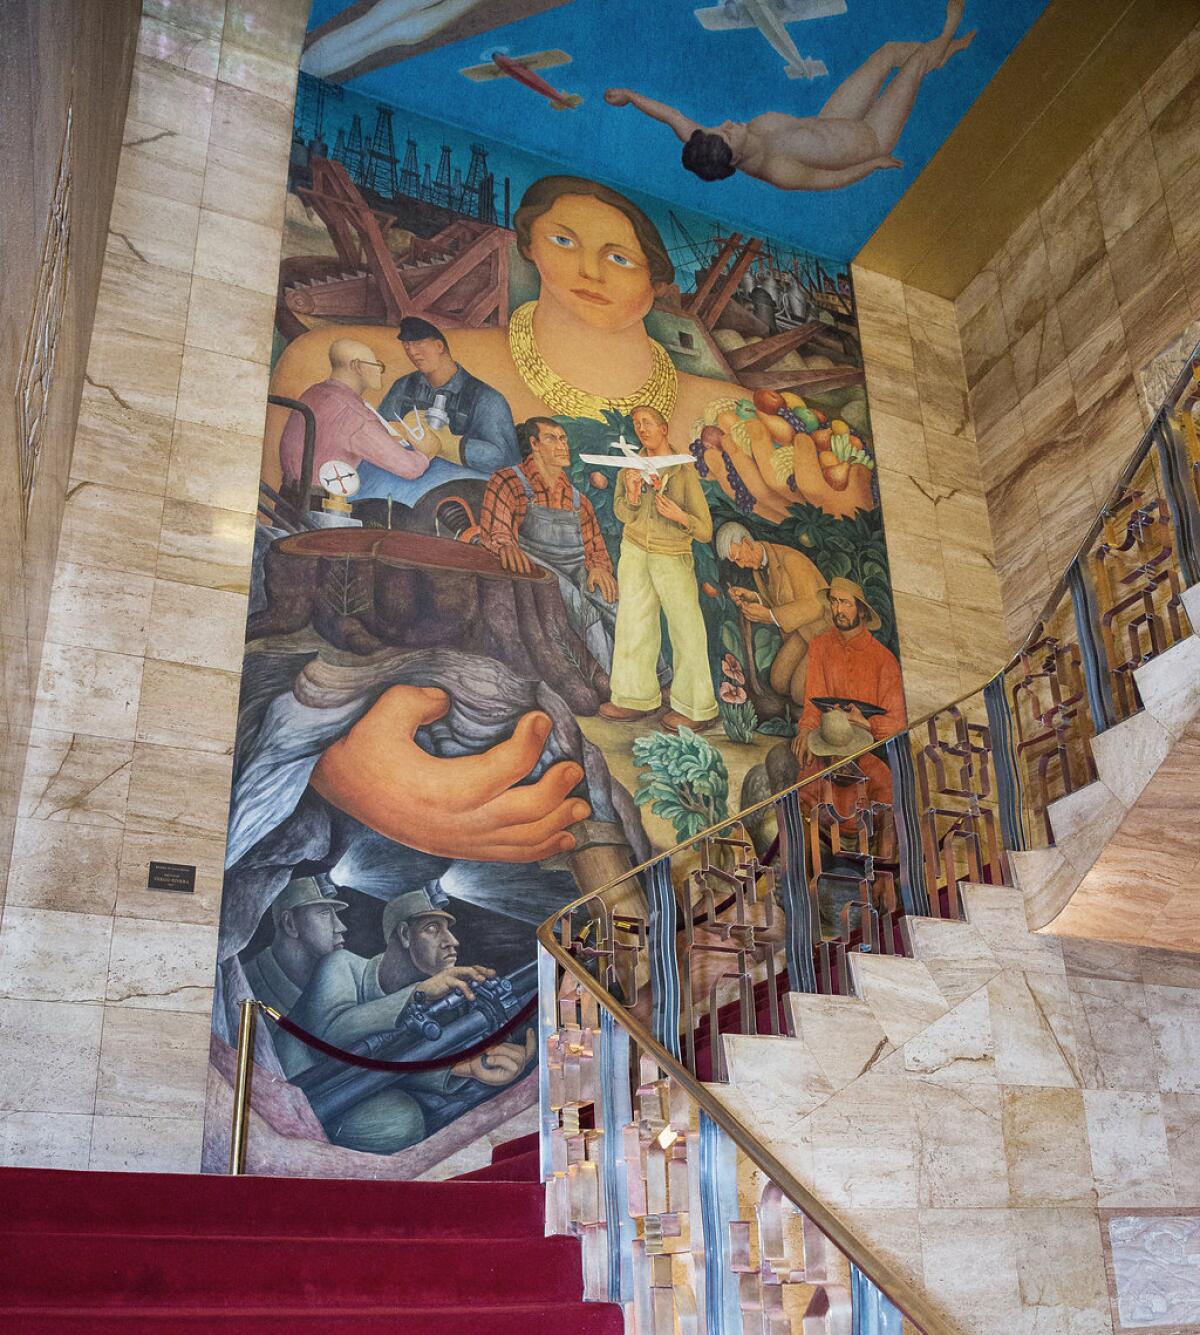 A large mural depicting a female figure